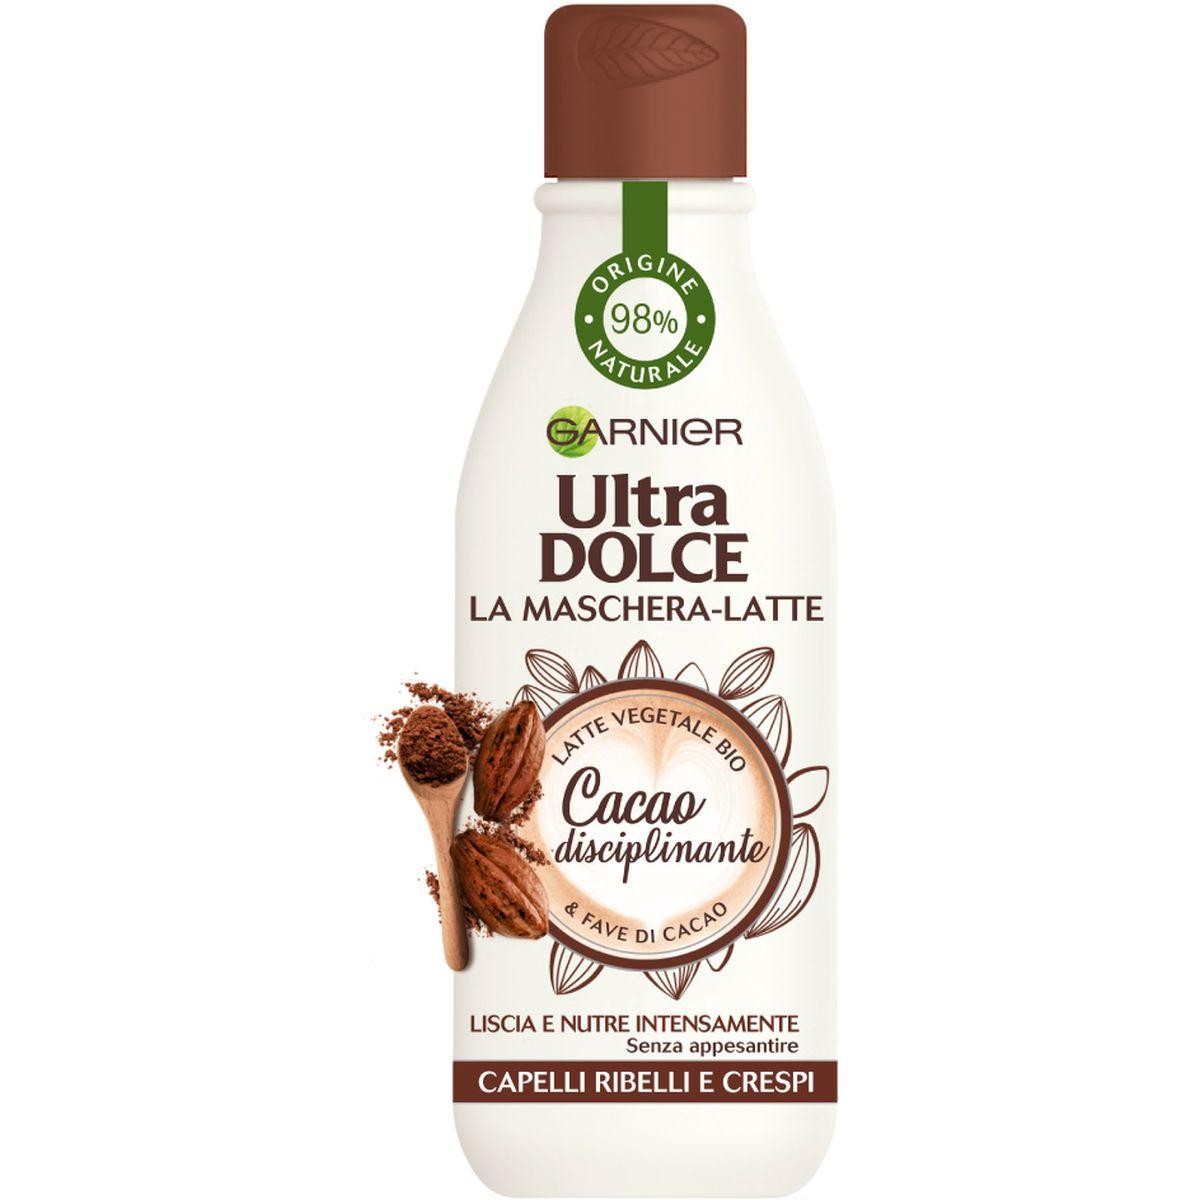 Garnier Ultra Dolce La Maschera Latte Cacao Disciplinante 250ml